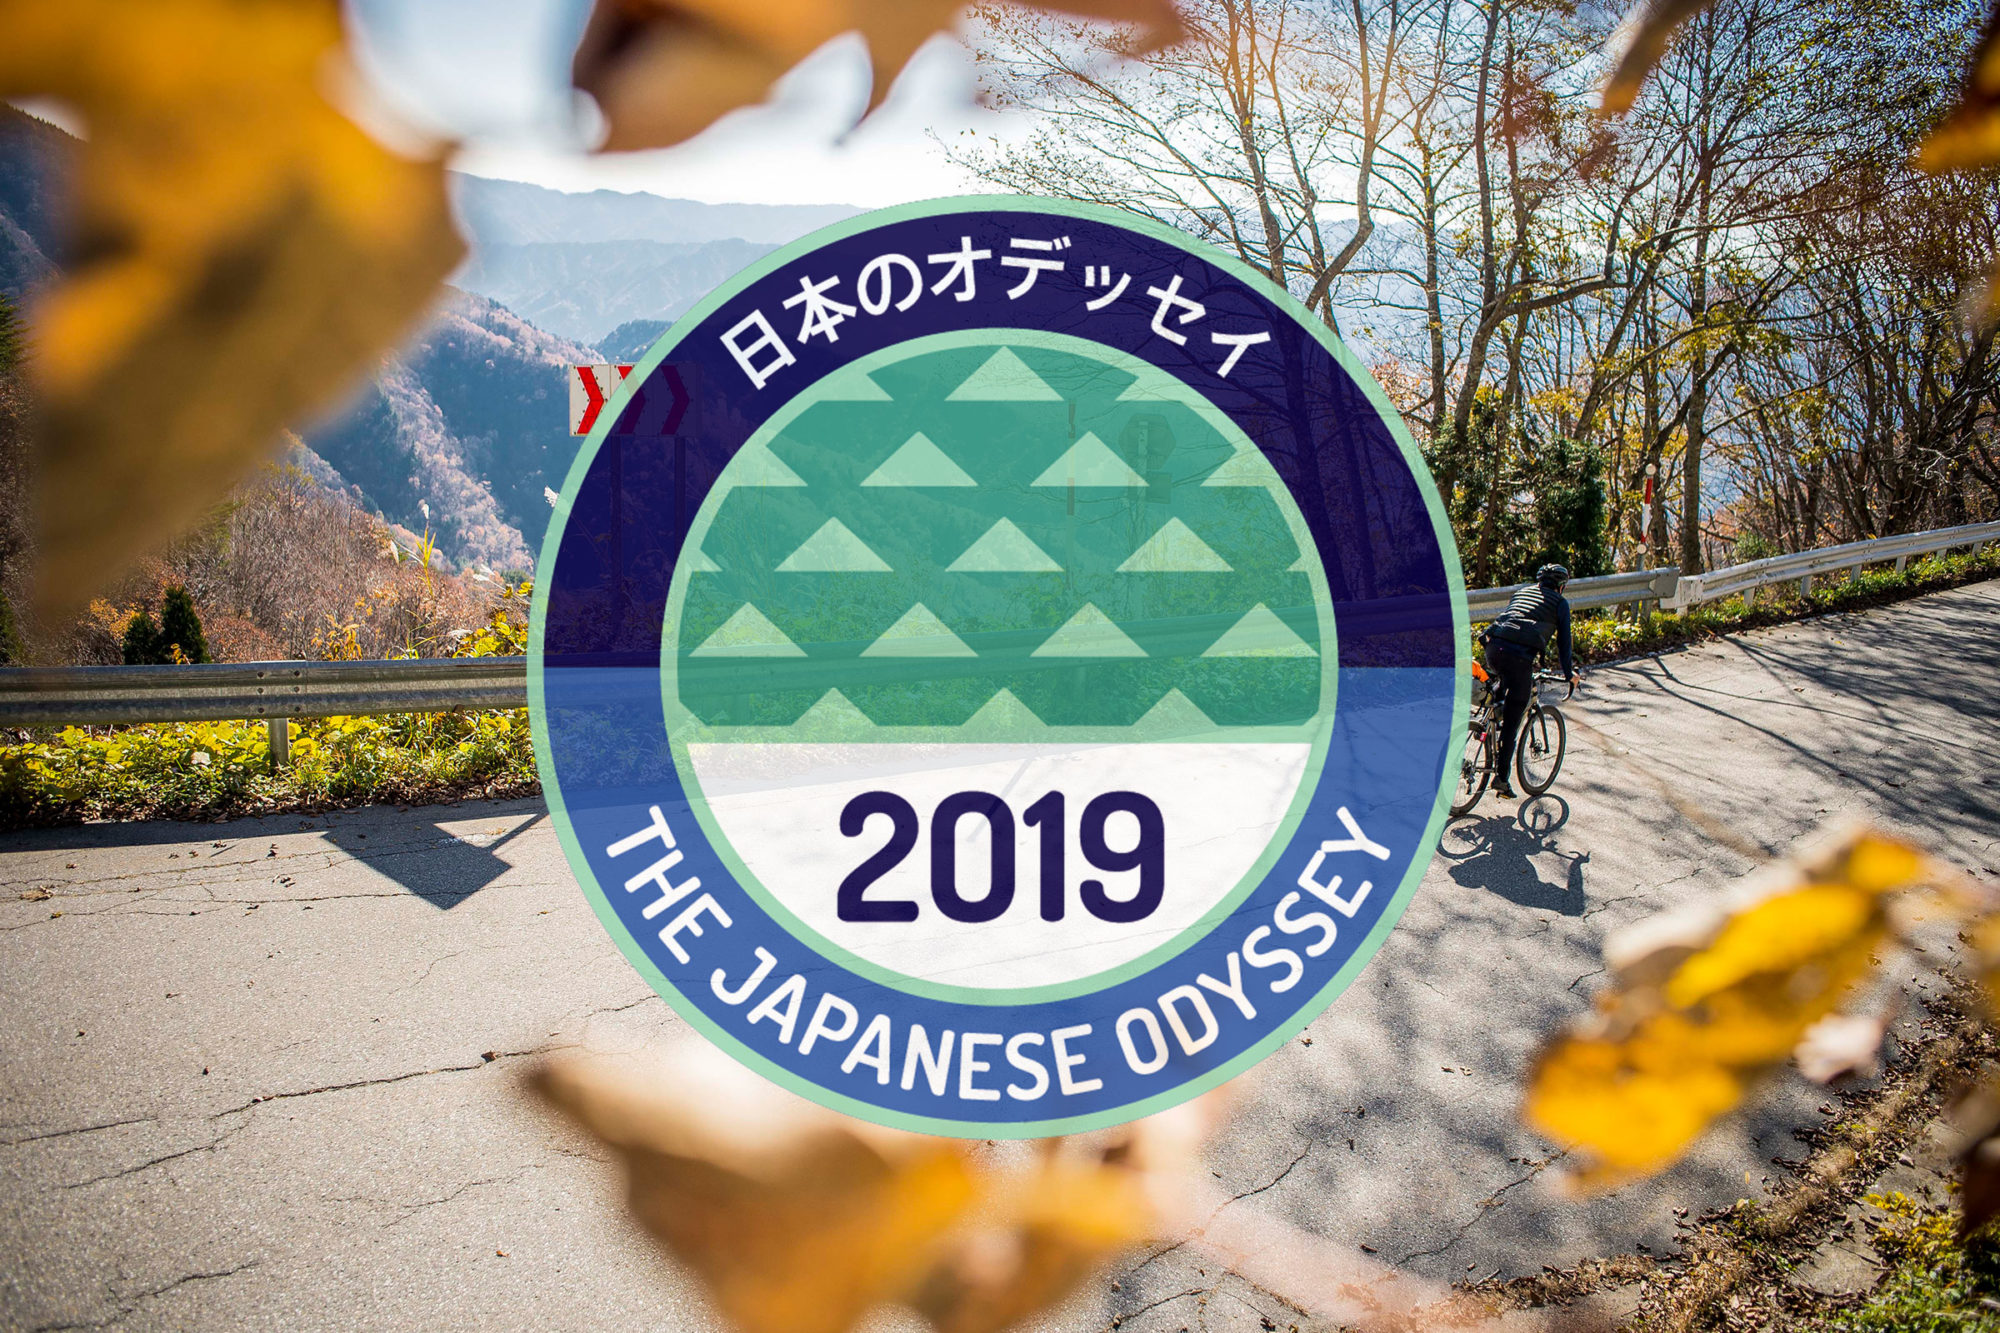 Japanese Odyssey 2019